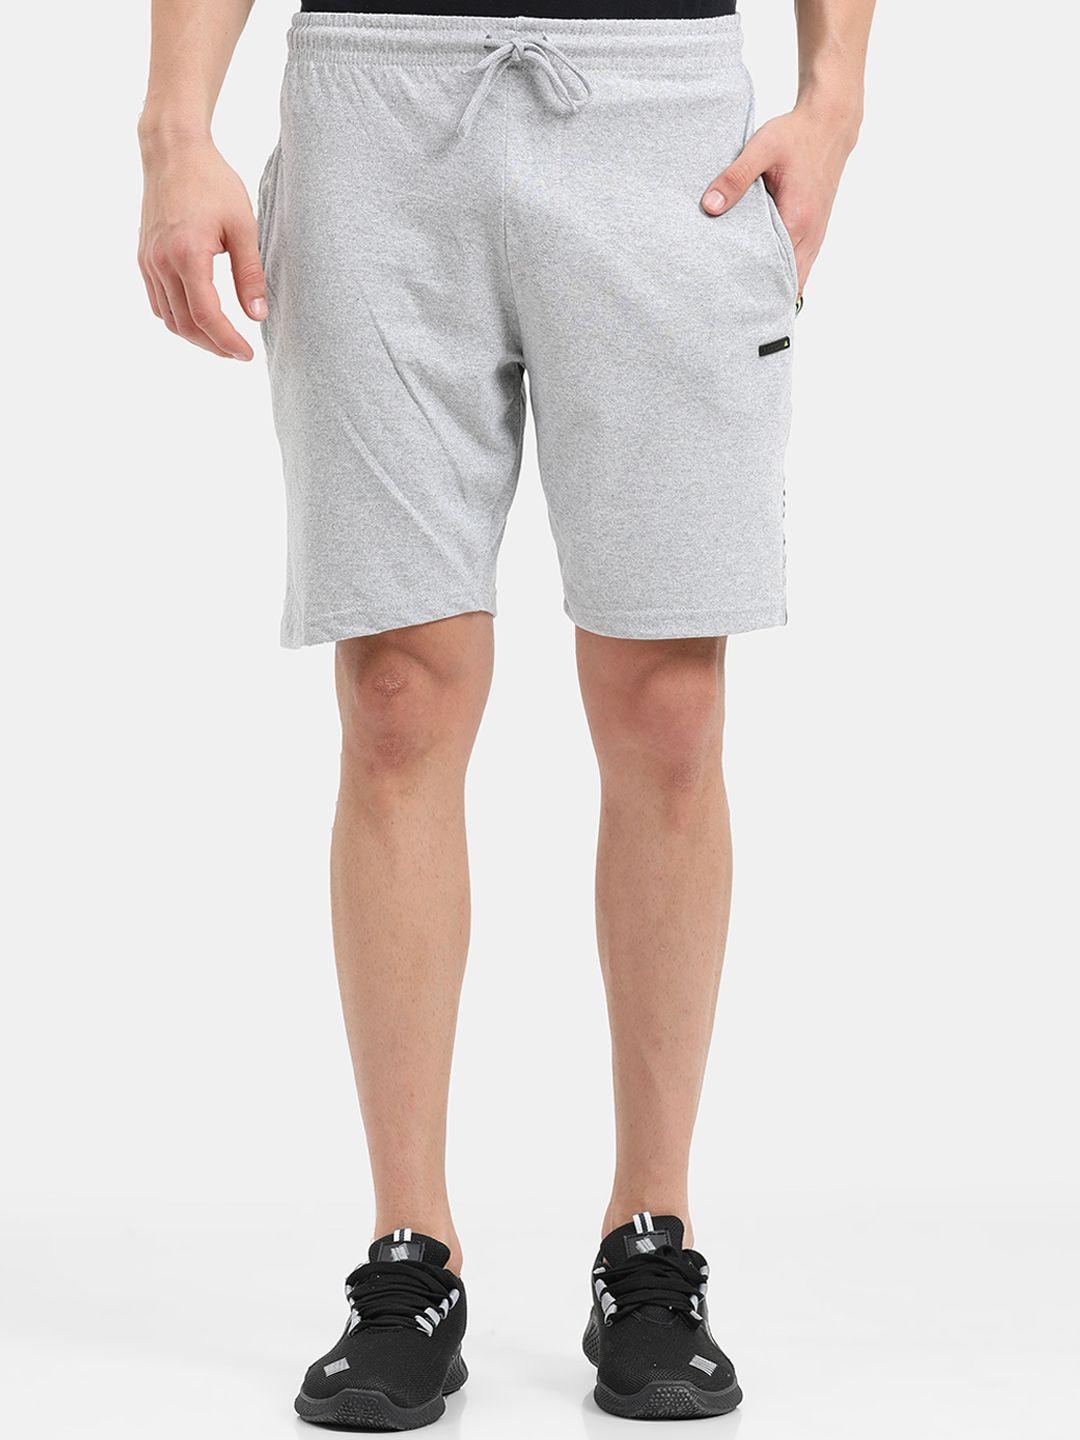 ardeur-men-grey-pure-cotton-training-or-gym-shorts